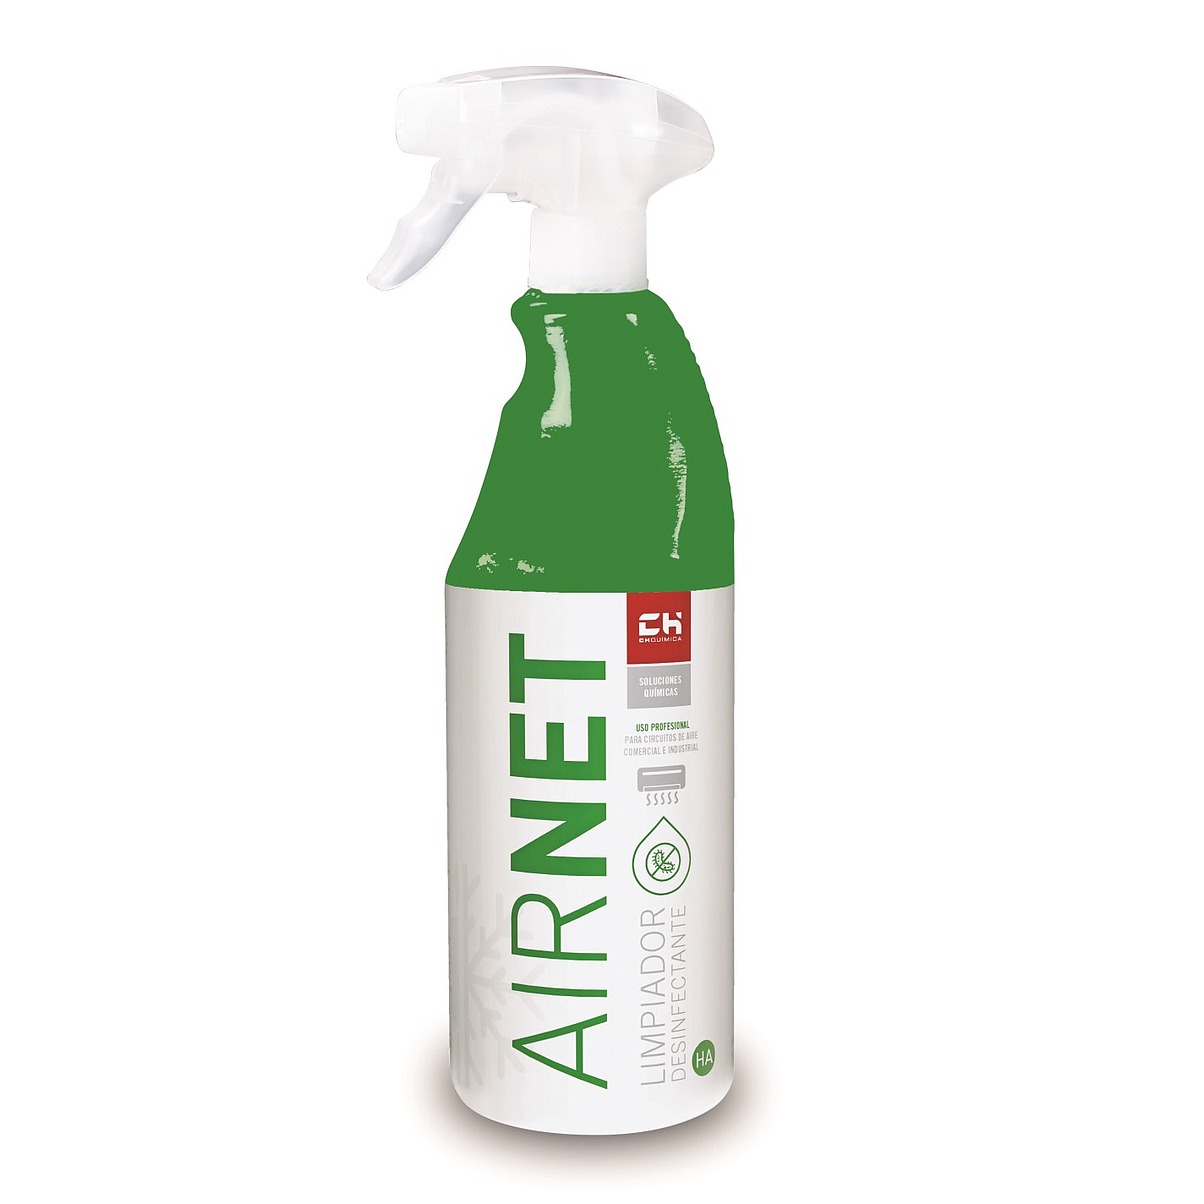 Airnet + Airpur Limpiador Eliminador Olores Aire Acondicionado Coche